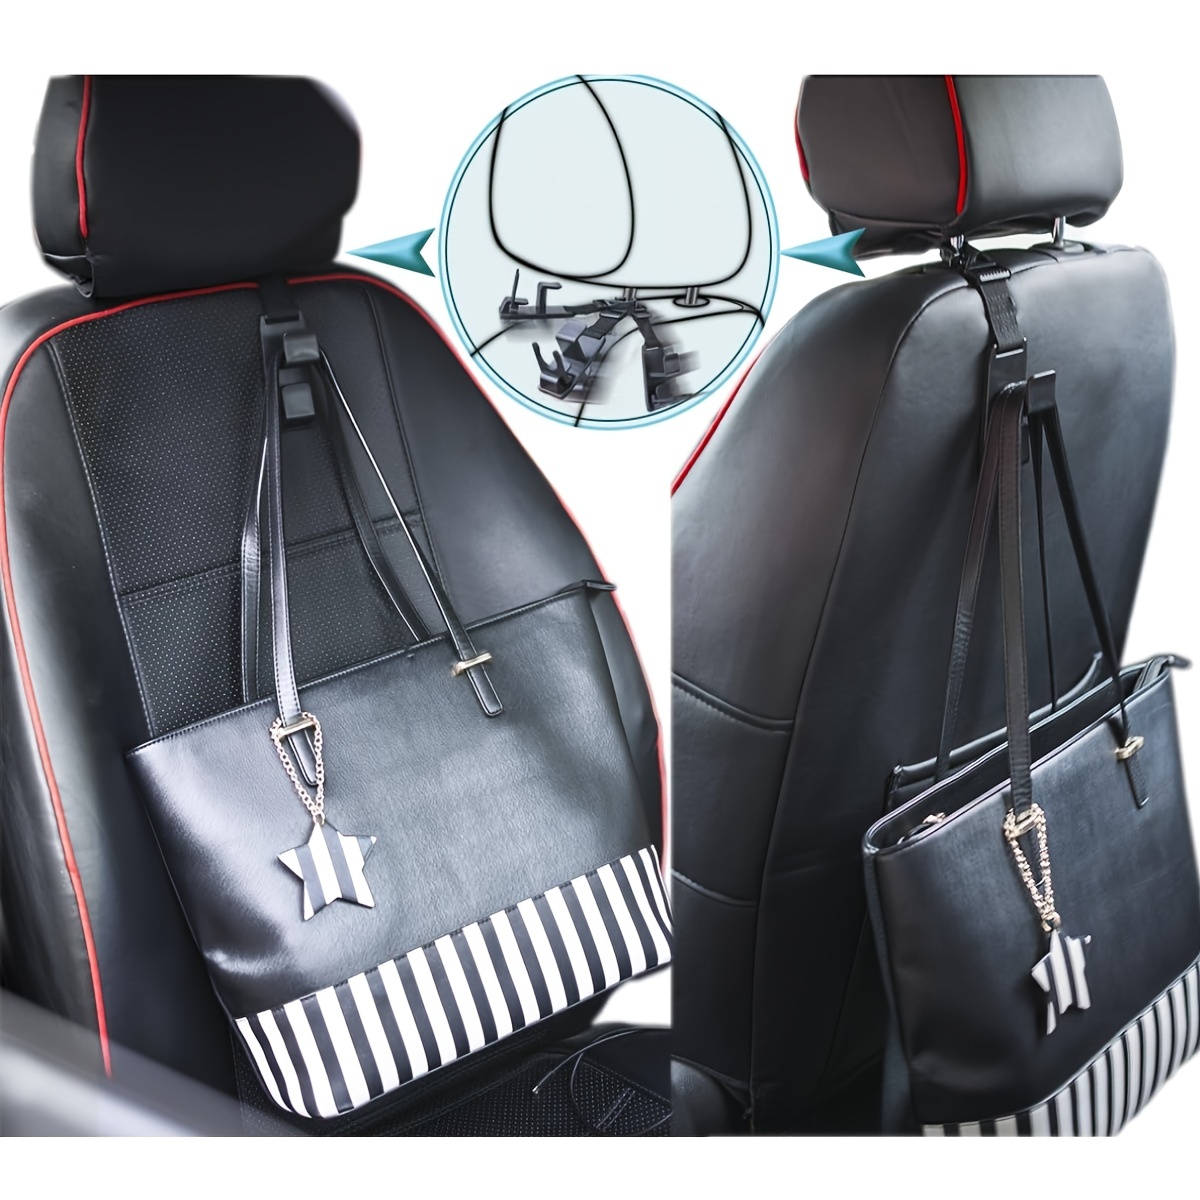 Magic Car Headrest Hooks, Car Seat Organizer Purse Headrest Hook